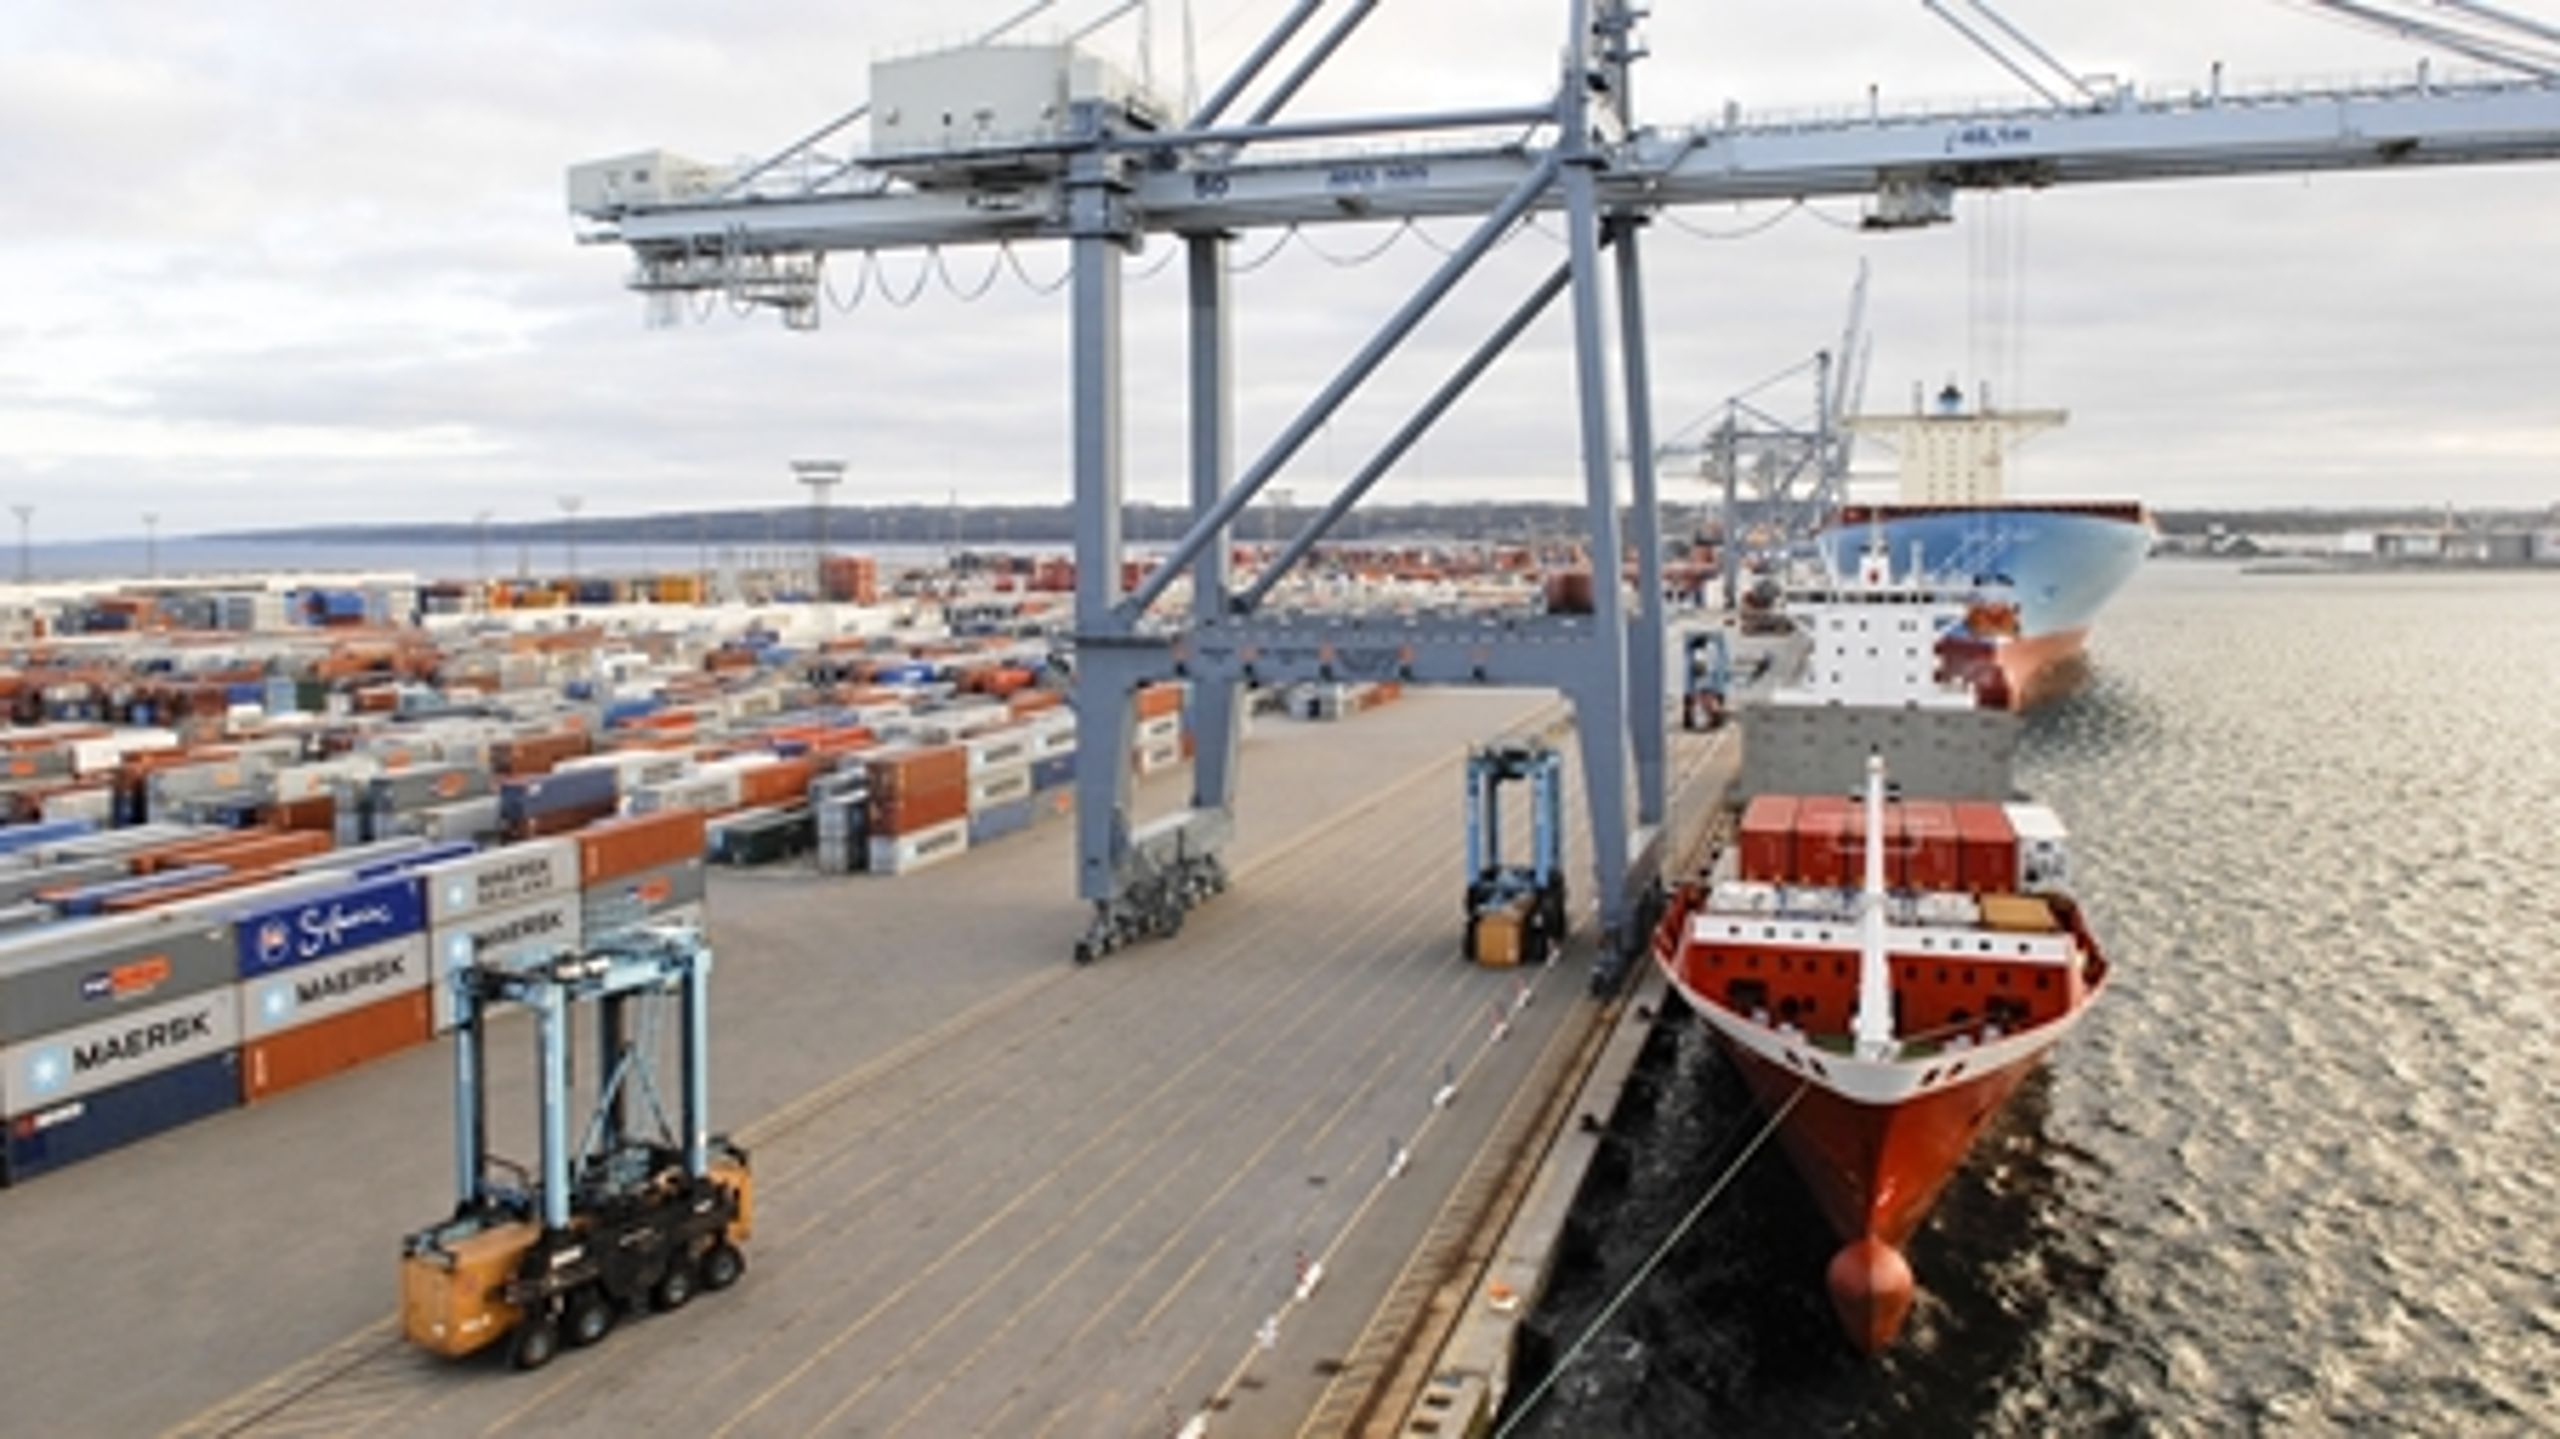 Et enigt havnelovudvalg har fremlagt 12 konkrete anbefalinger til, hvordan Danmark kan få havne i verdensklasse.